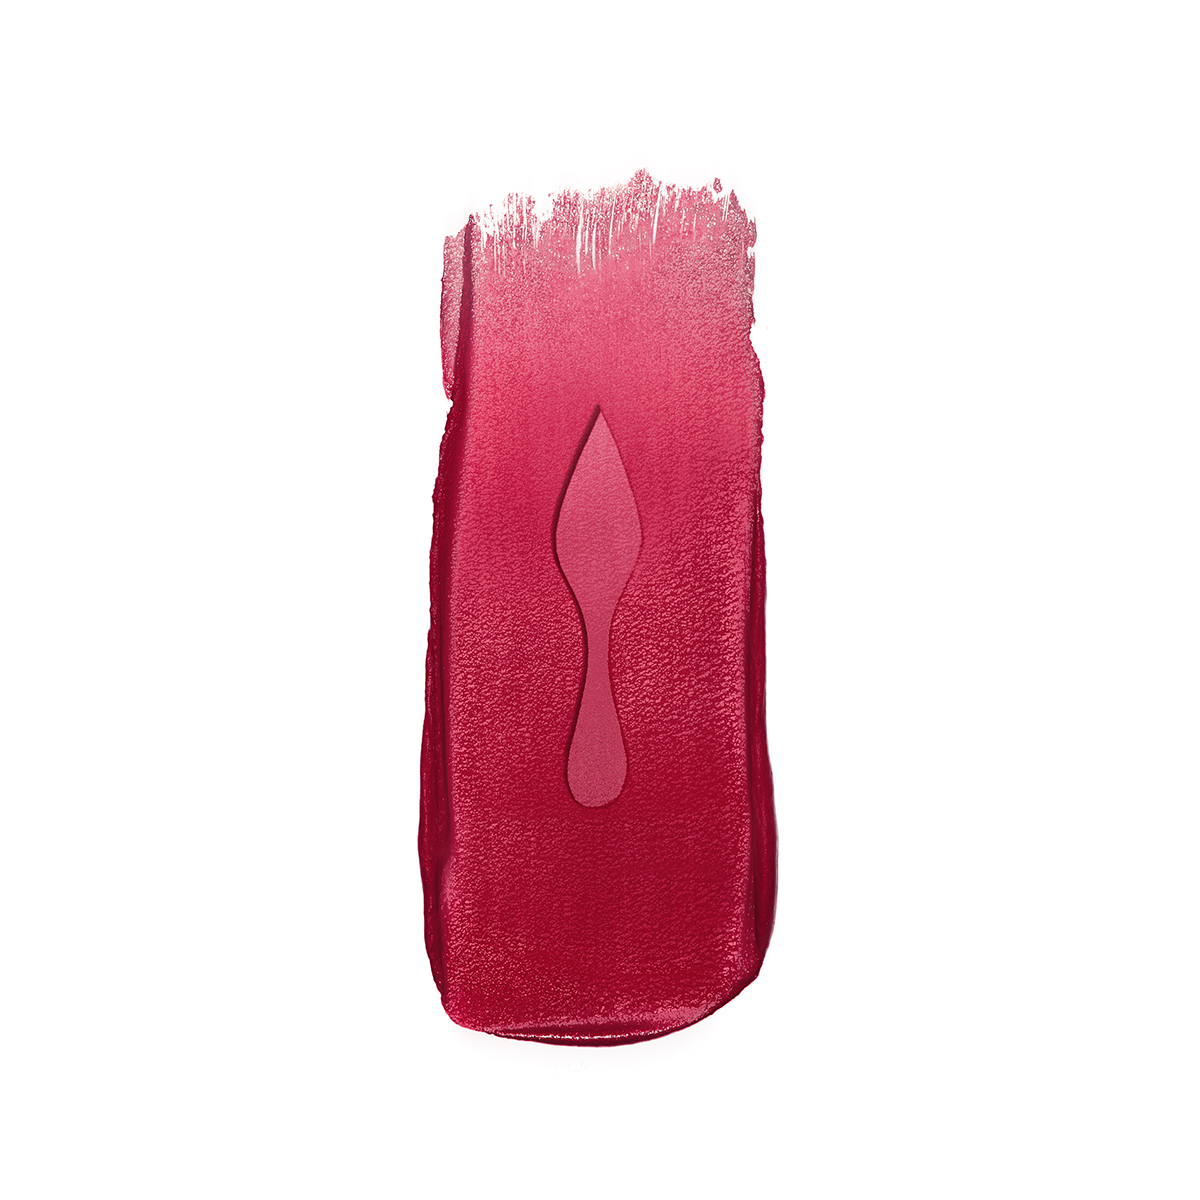 Rouge Louboutin Matte Fluids - Matte liquid lipstick - Just Nude